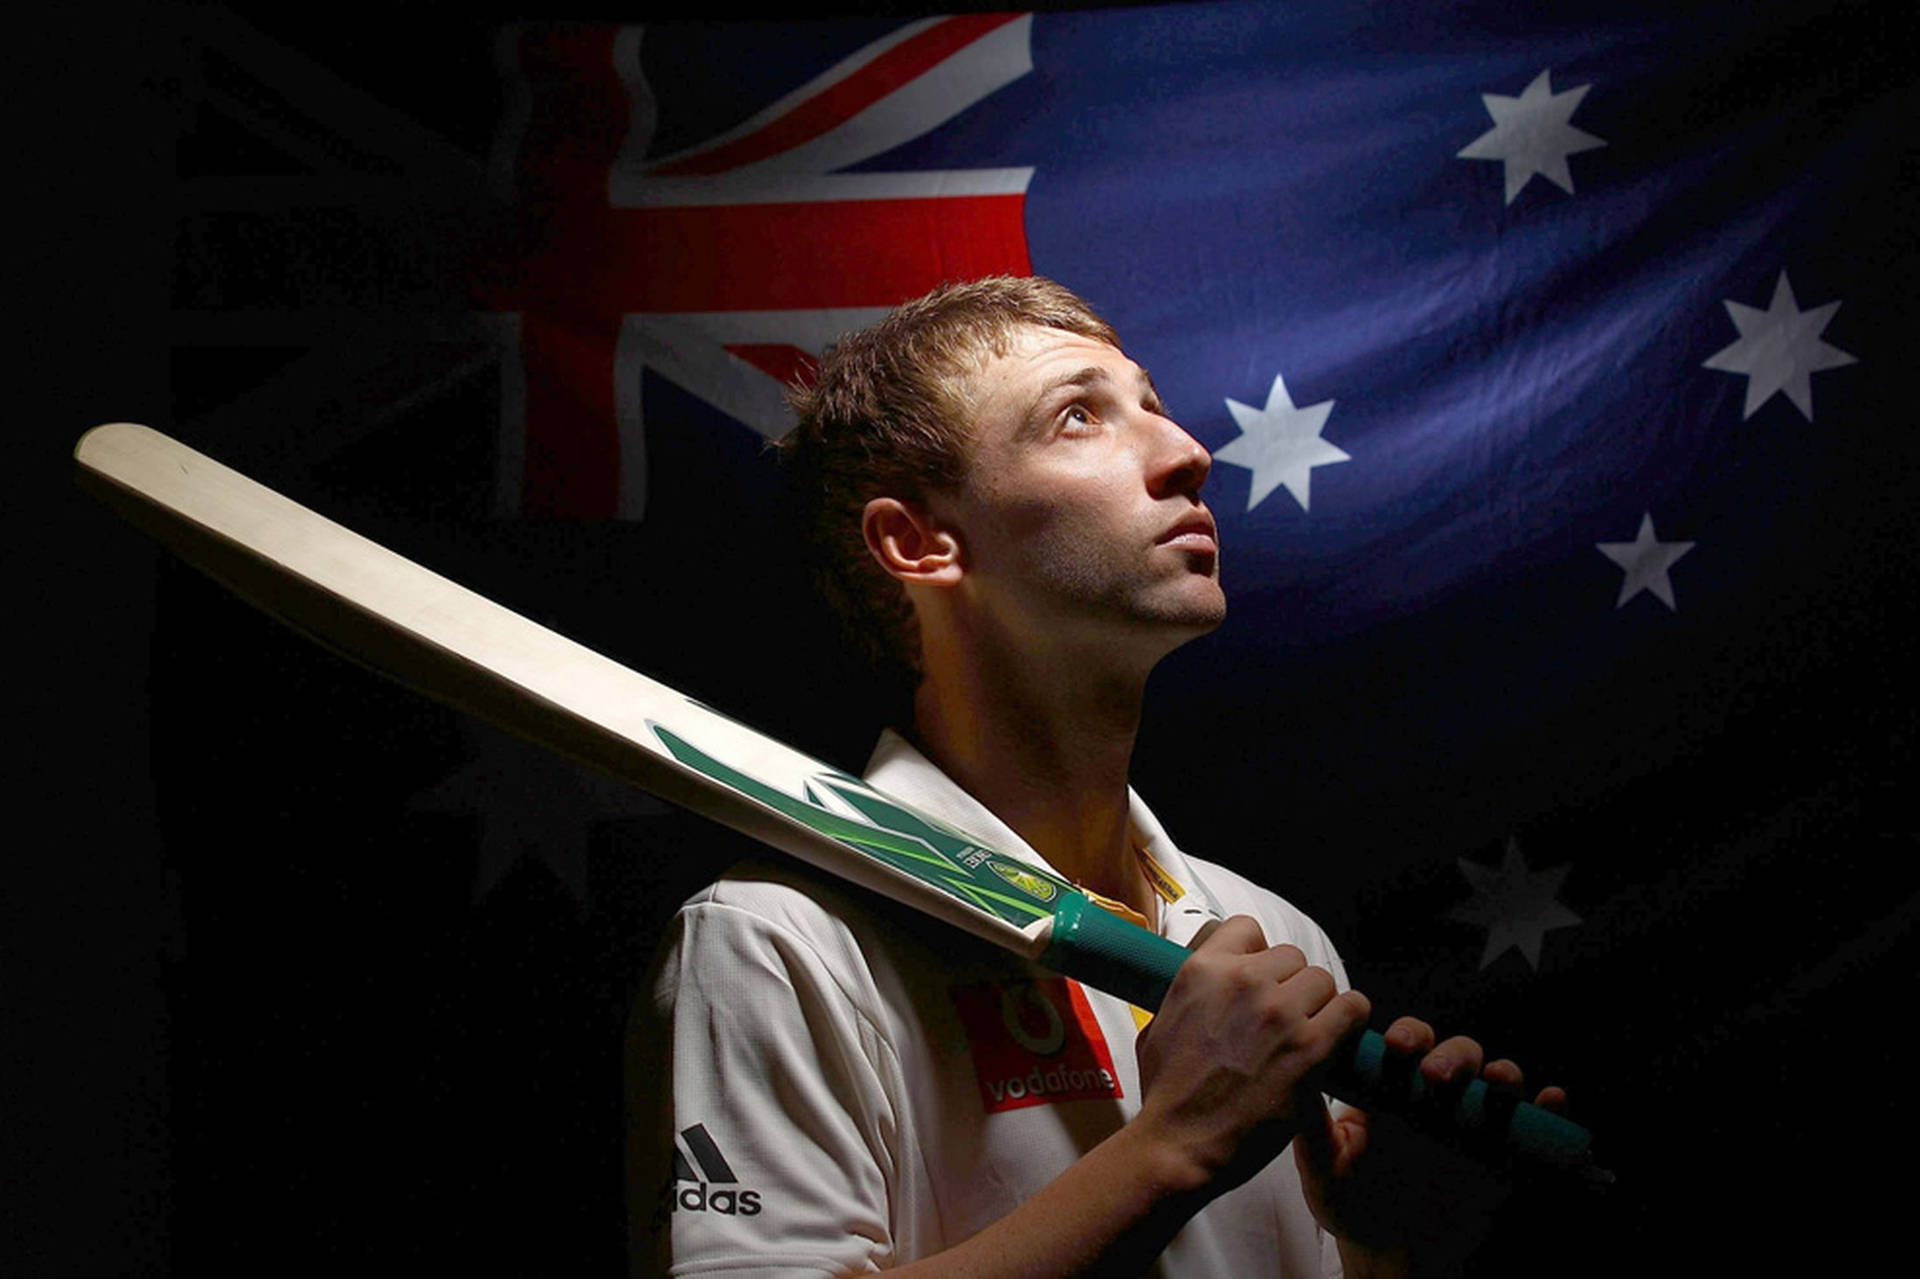 Philip Hughes - The Shining Star Of Australian Cricket Background